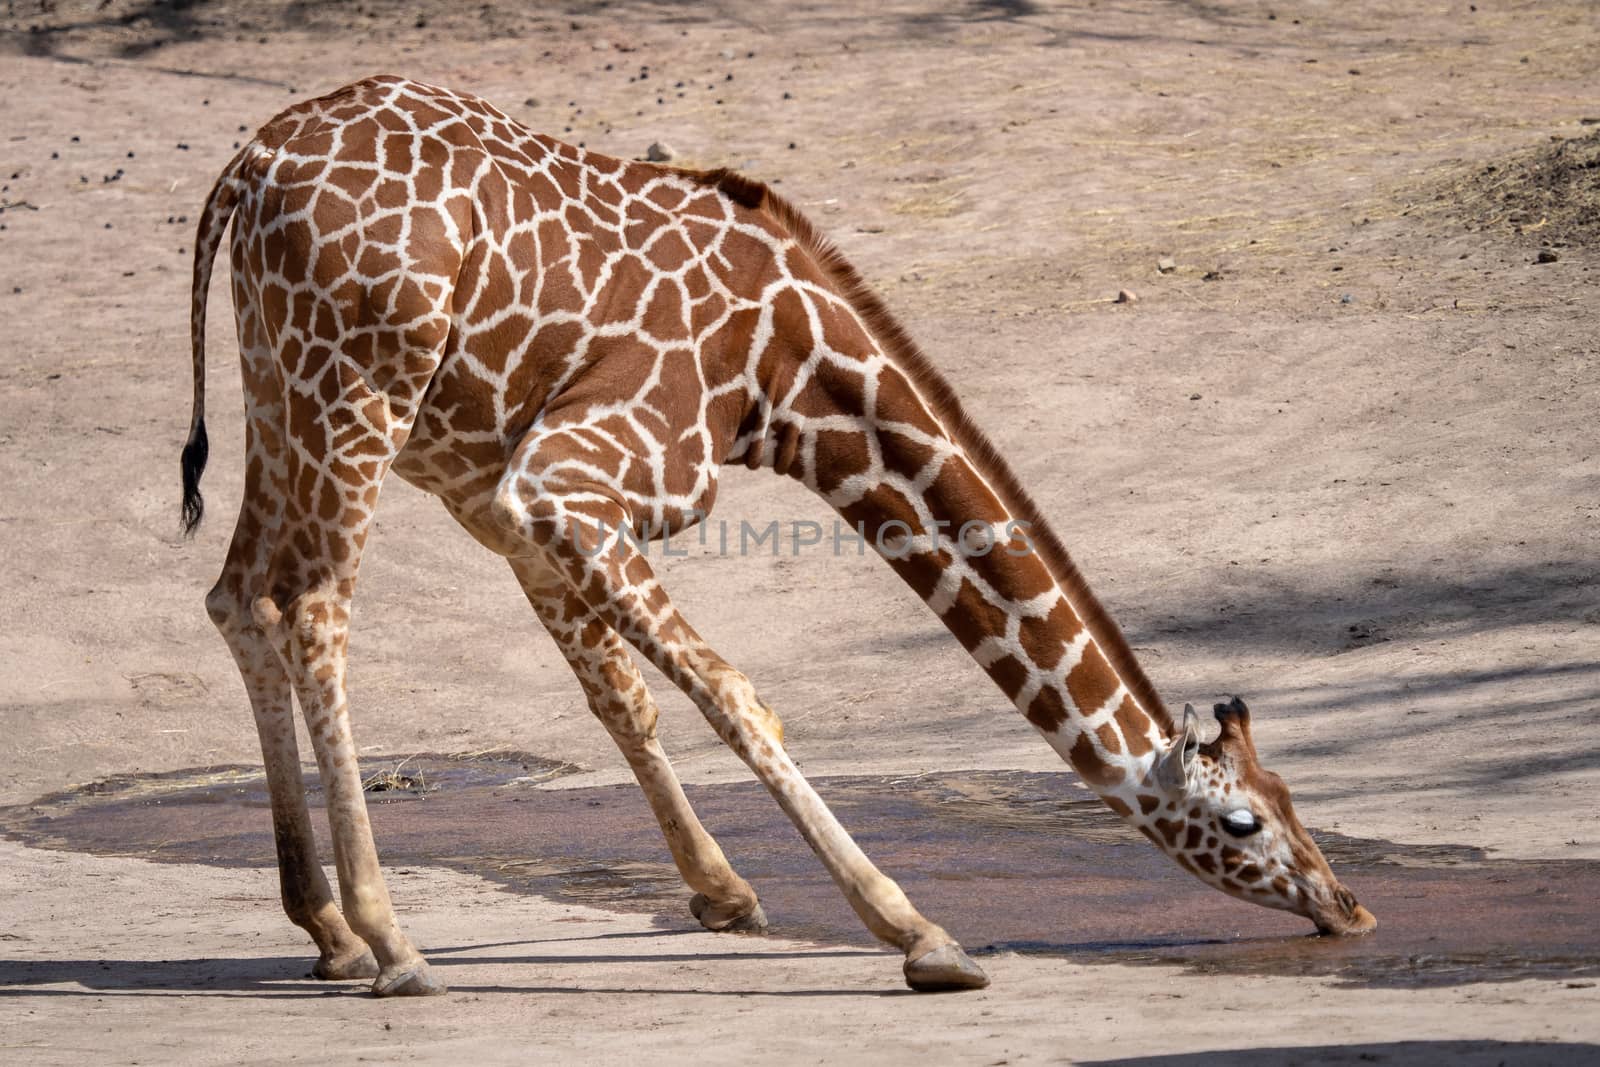 One giraffe drinking water in the dry landscape  by xtrekx